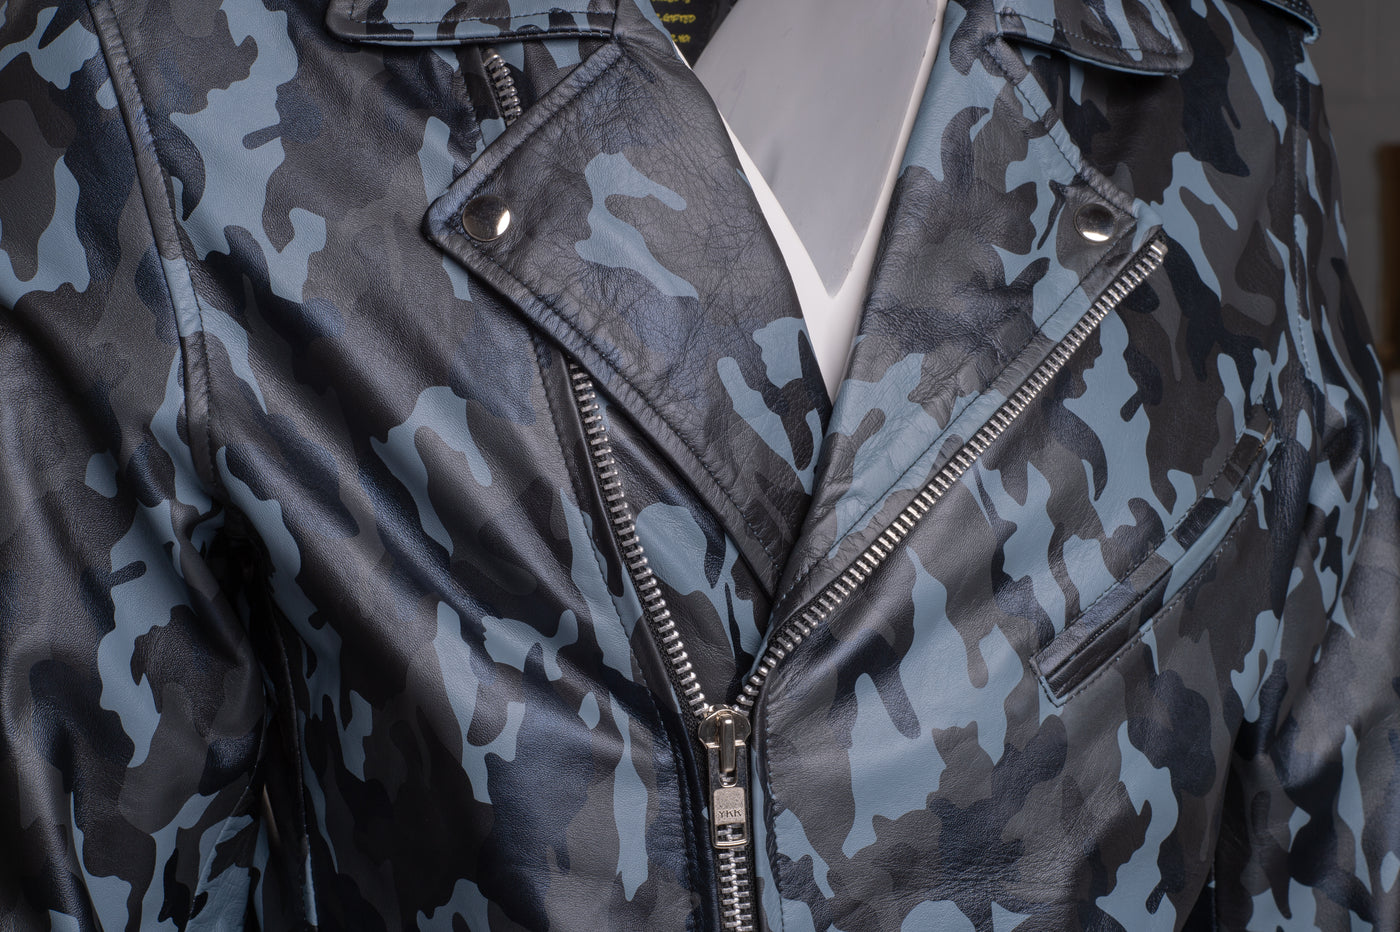 Blue Camouflage Biker Style Jacket